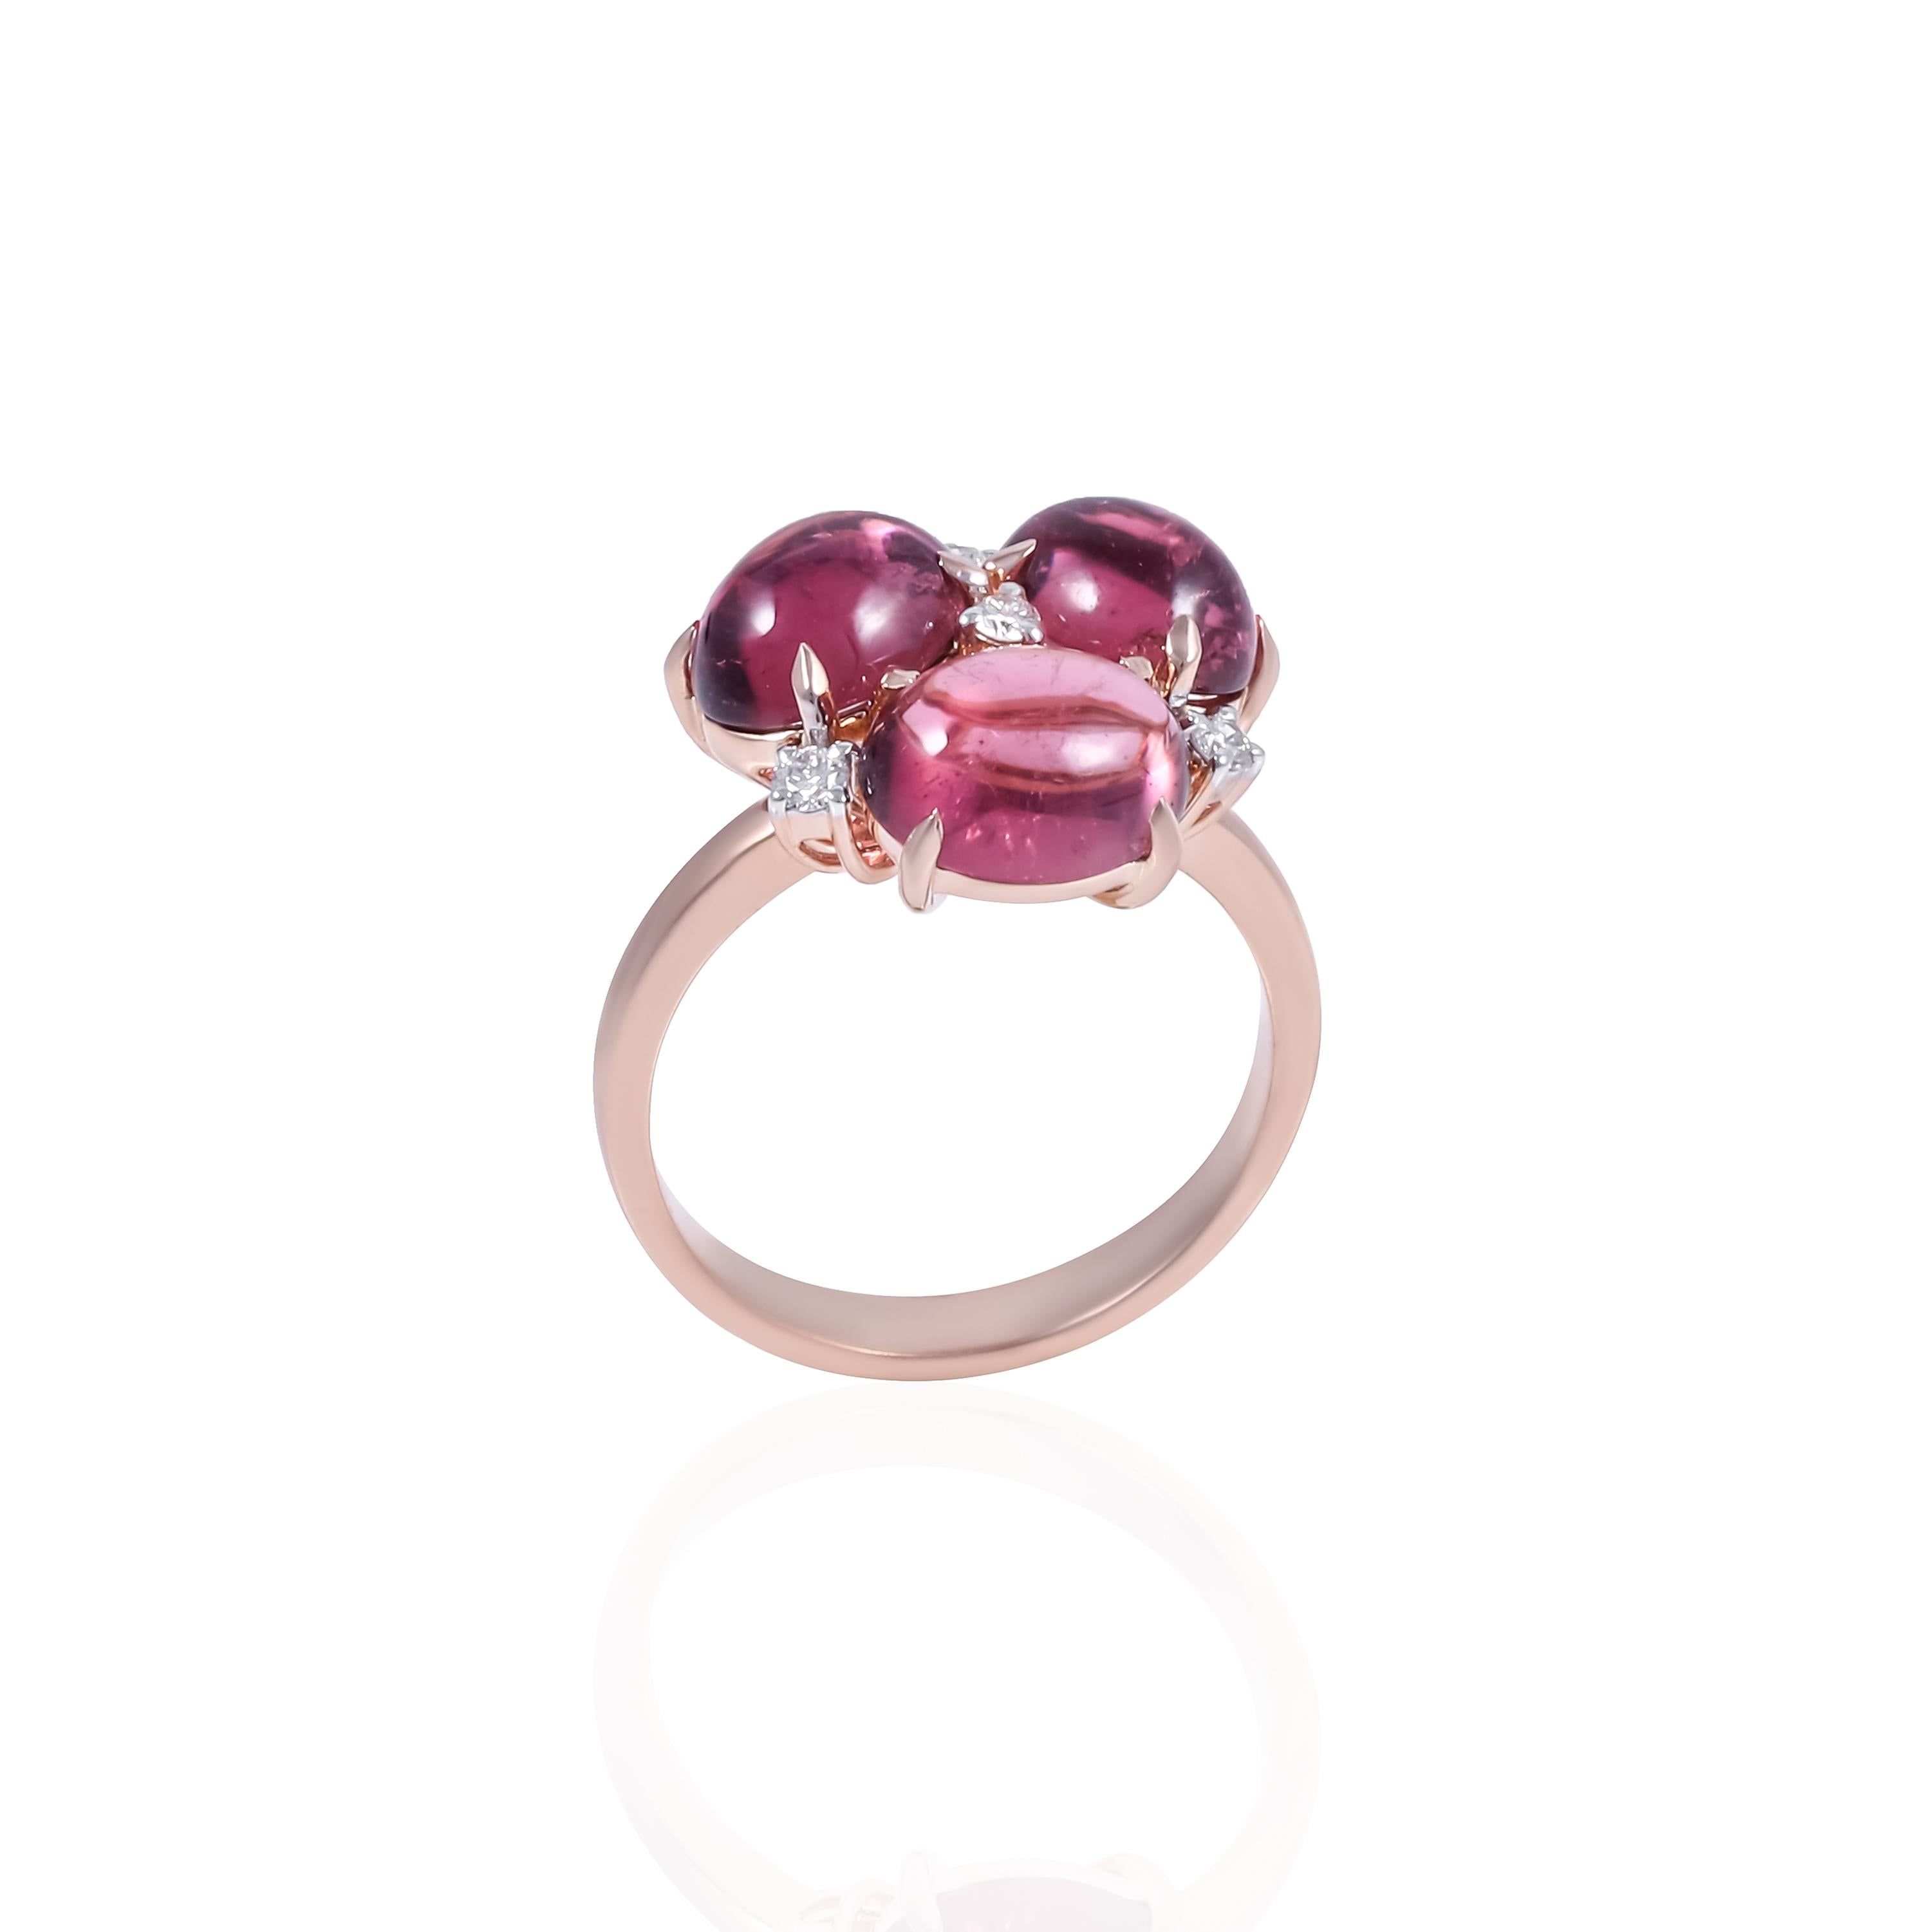 Cabochon 5.92 Carat Trio Pink Tourmaline Ring with 0.13 Carat Diamonds in 18 karat gold For Sale